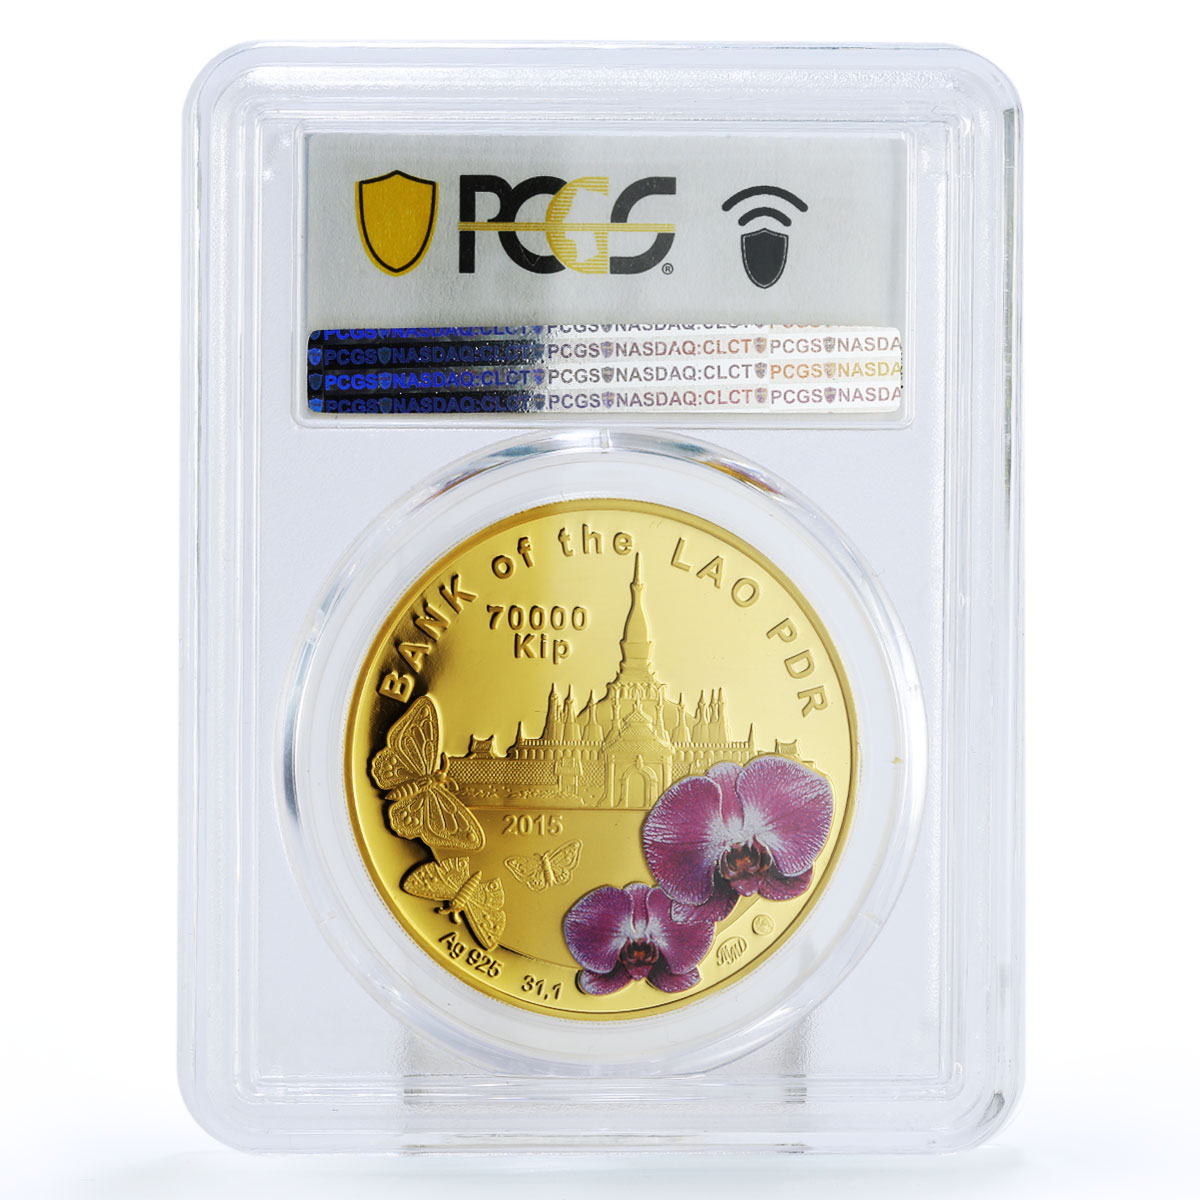 Laos 70000 kip Butterfly Flowers Hologram  PL69 PCGS silver coin 2015